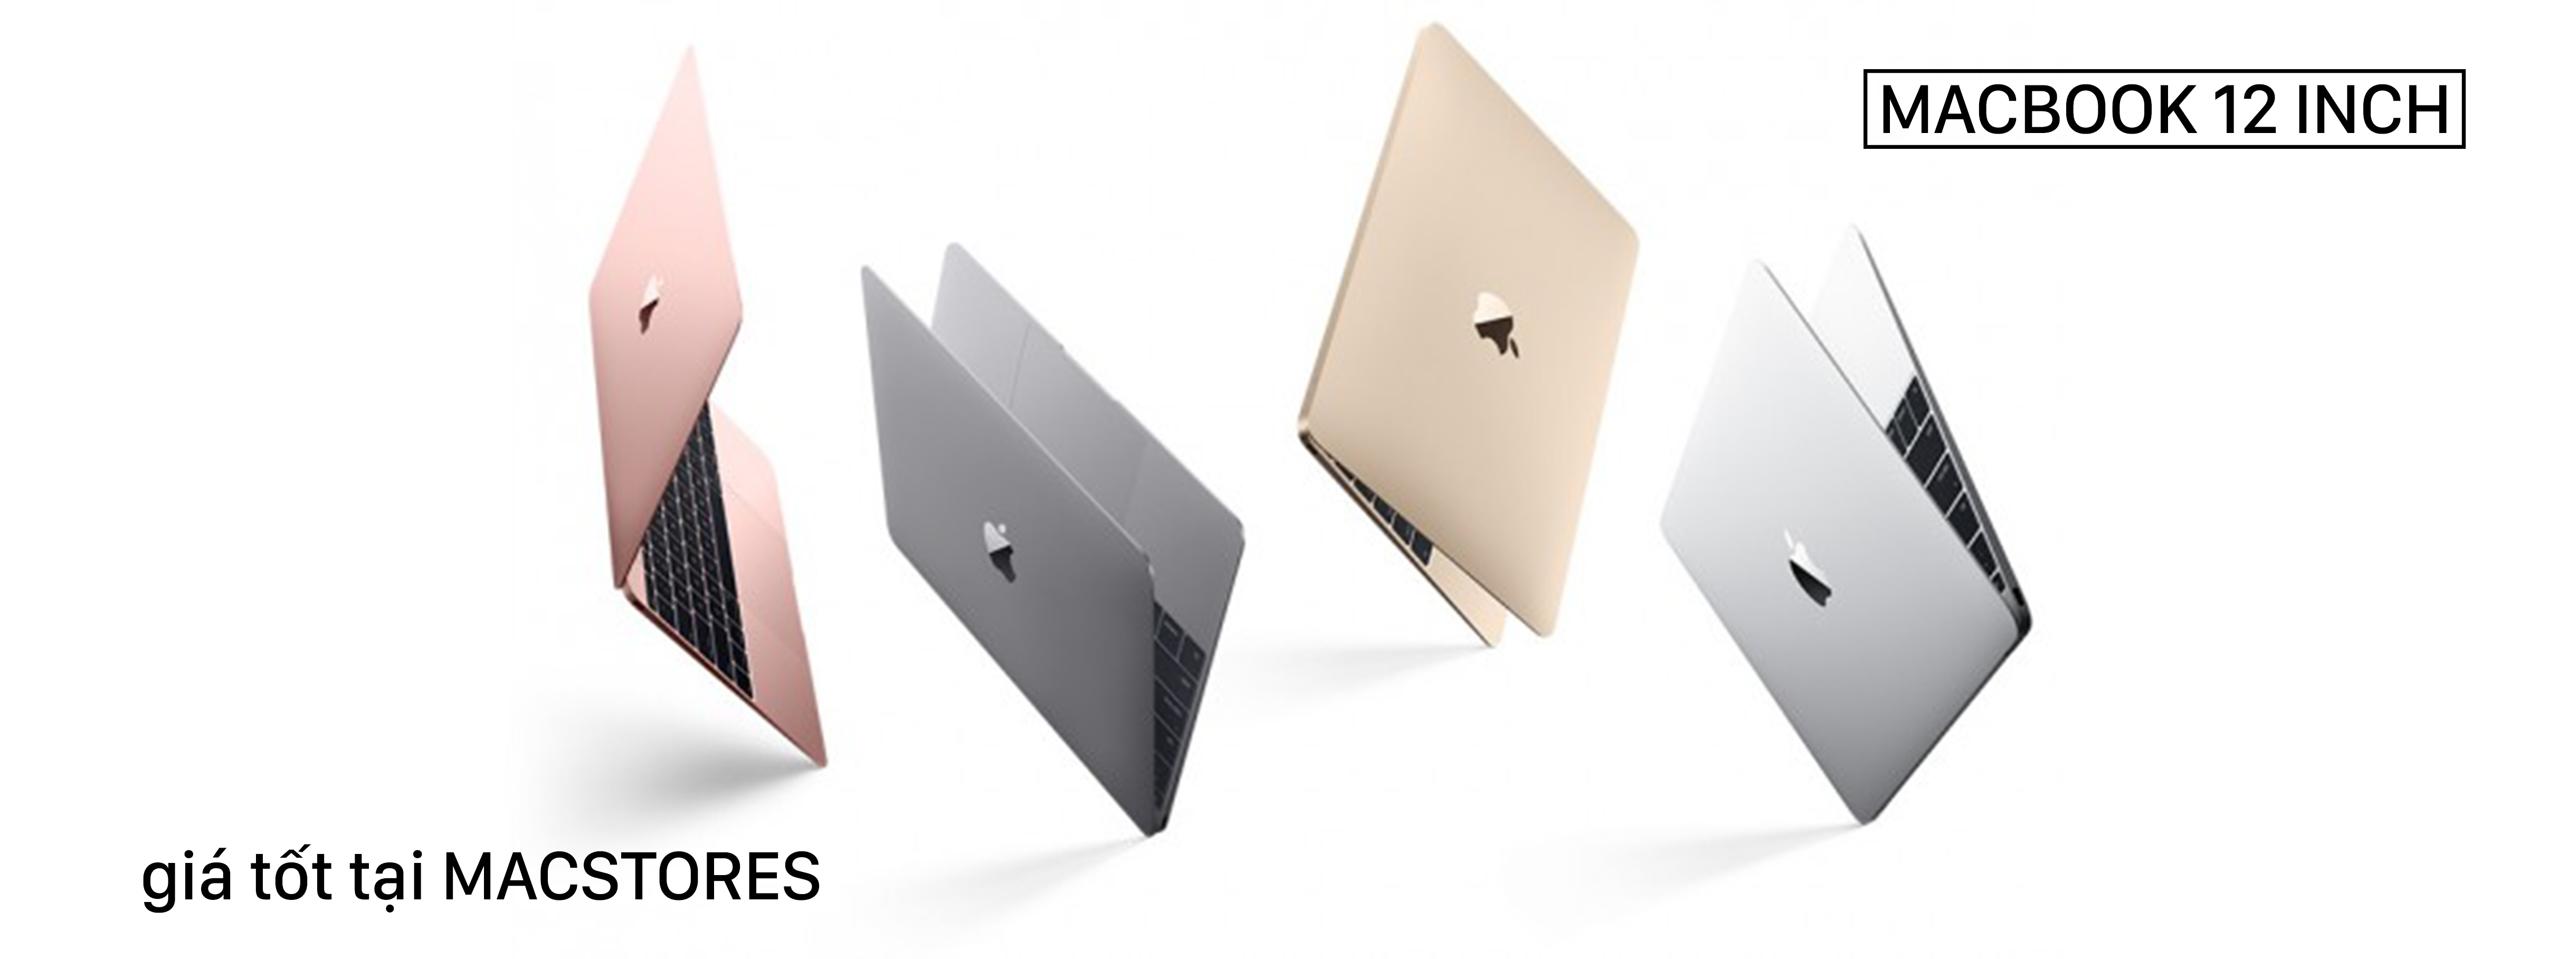 Macbook 12 Inch Cũ Giá Rẻ | The New Macbook Tại Mac Store